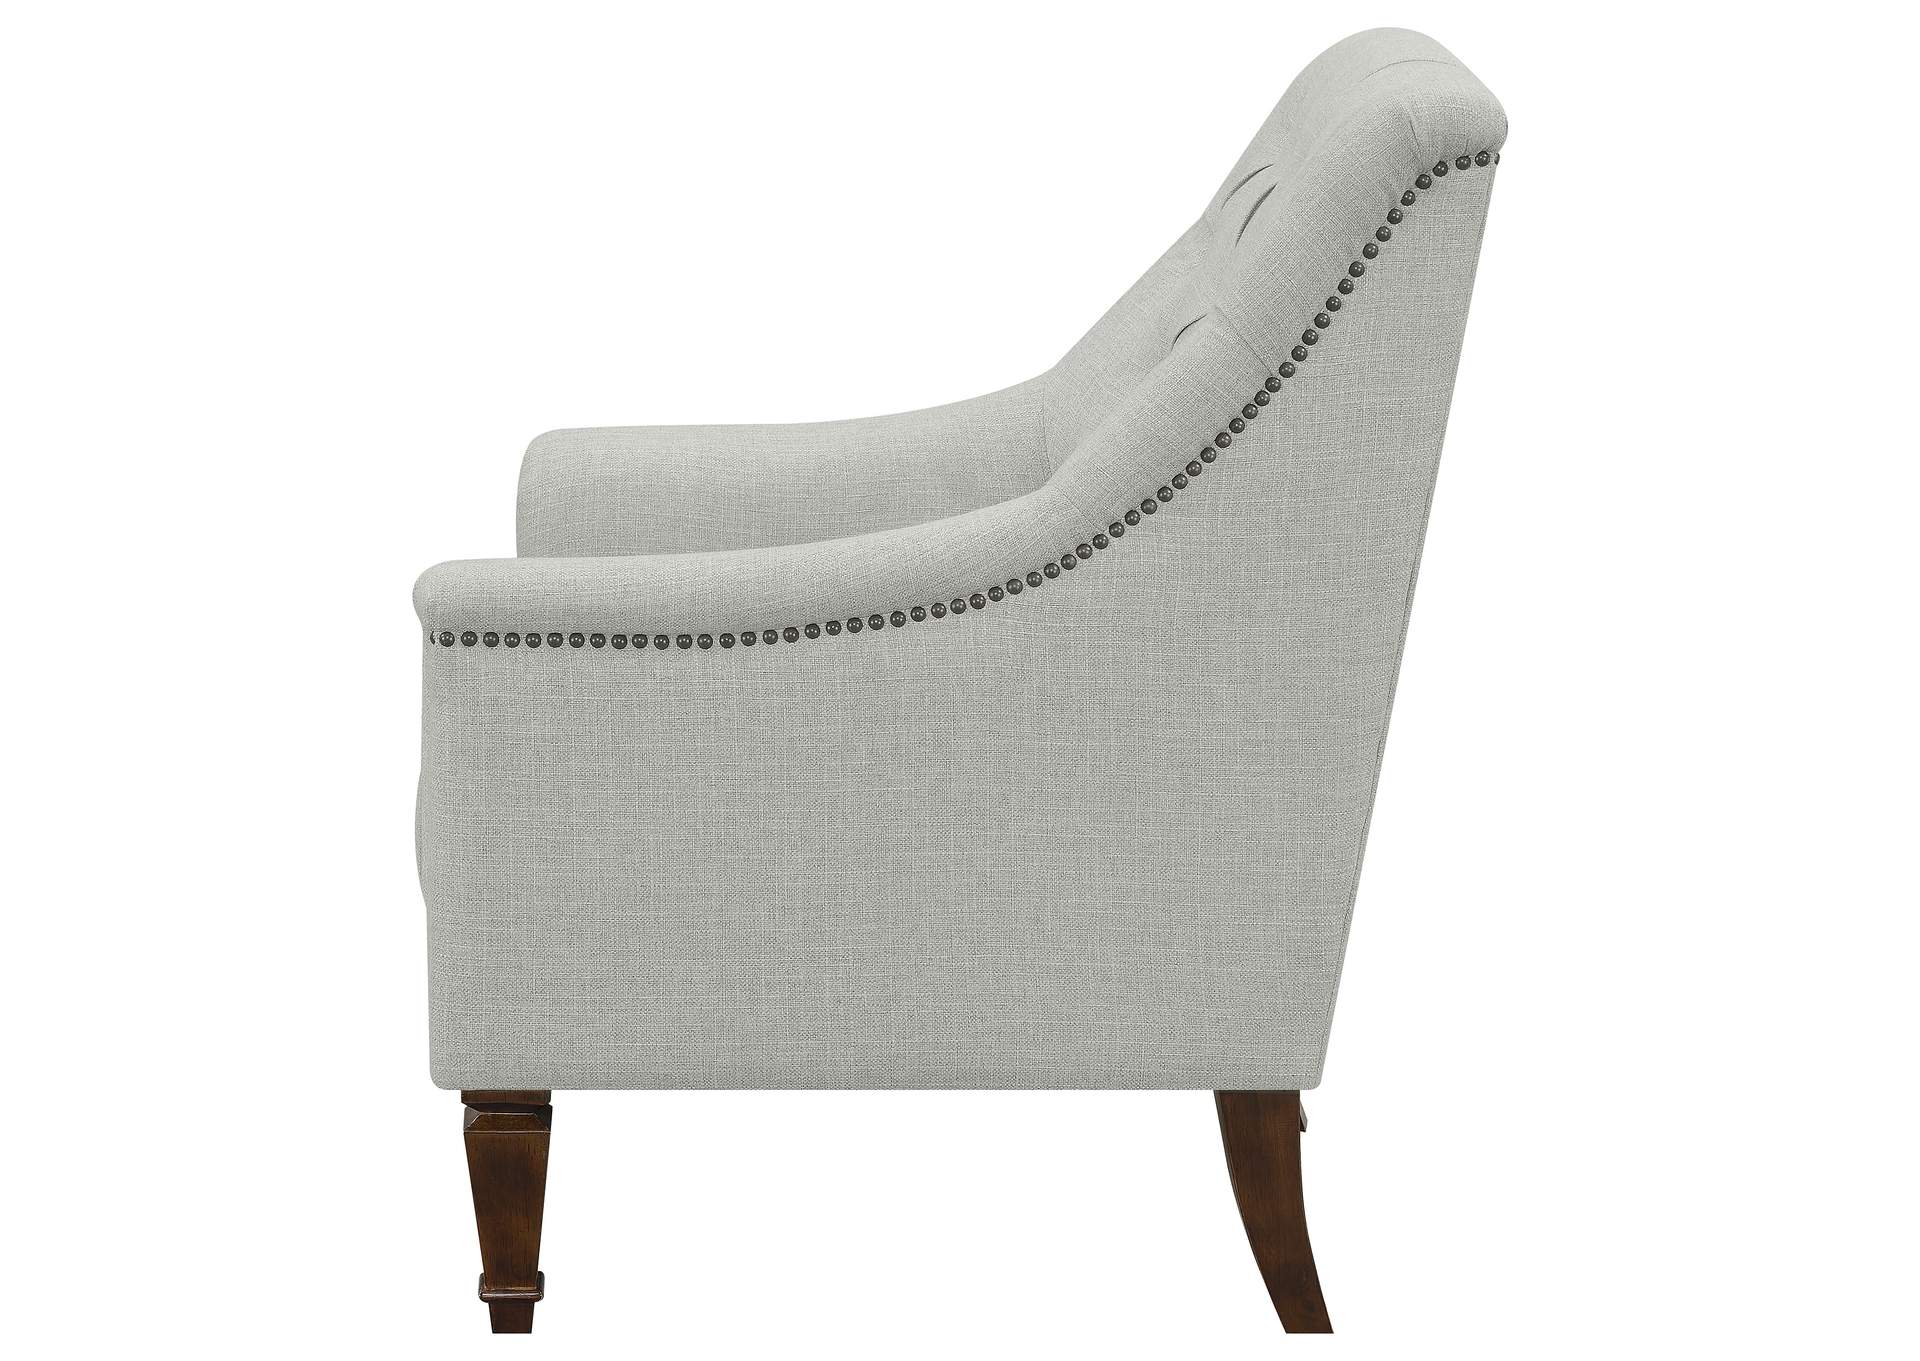 Avonlea Sloped Arm Upholstered Chair Grey,Coaster Furniture